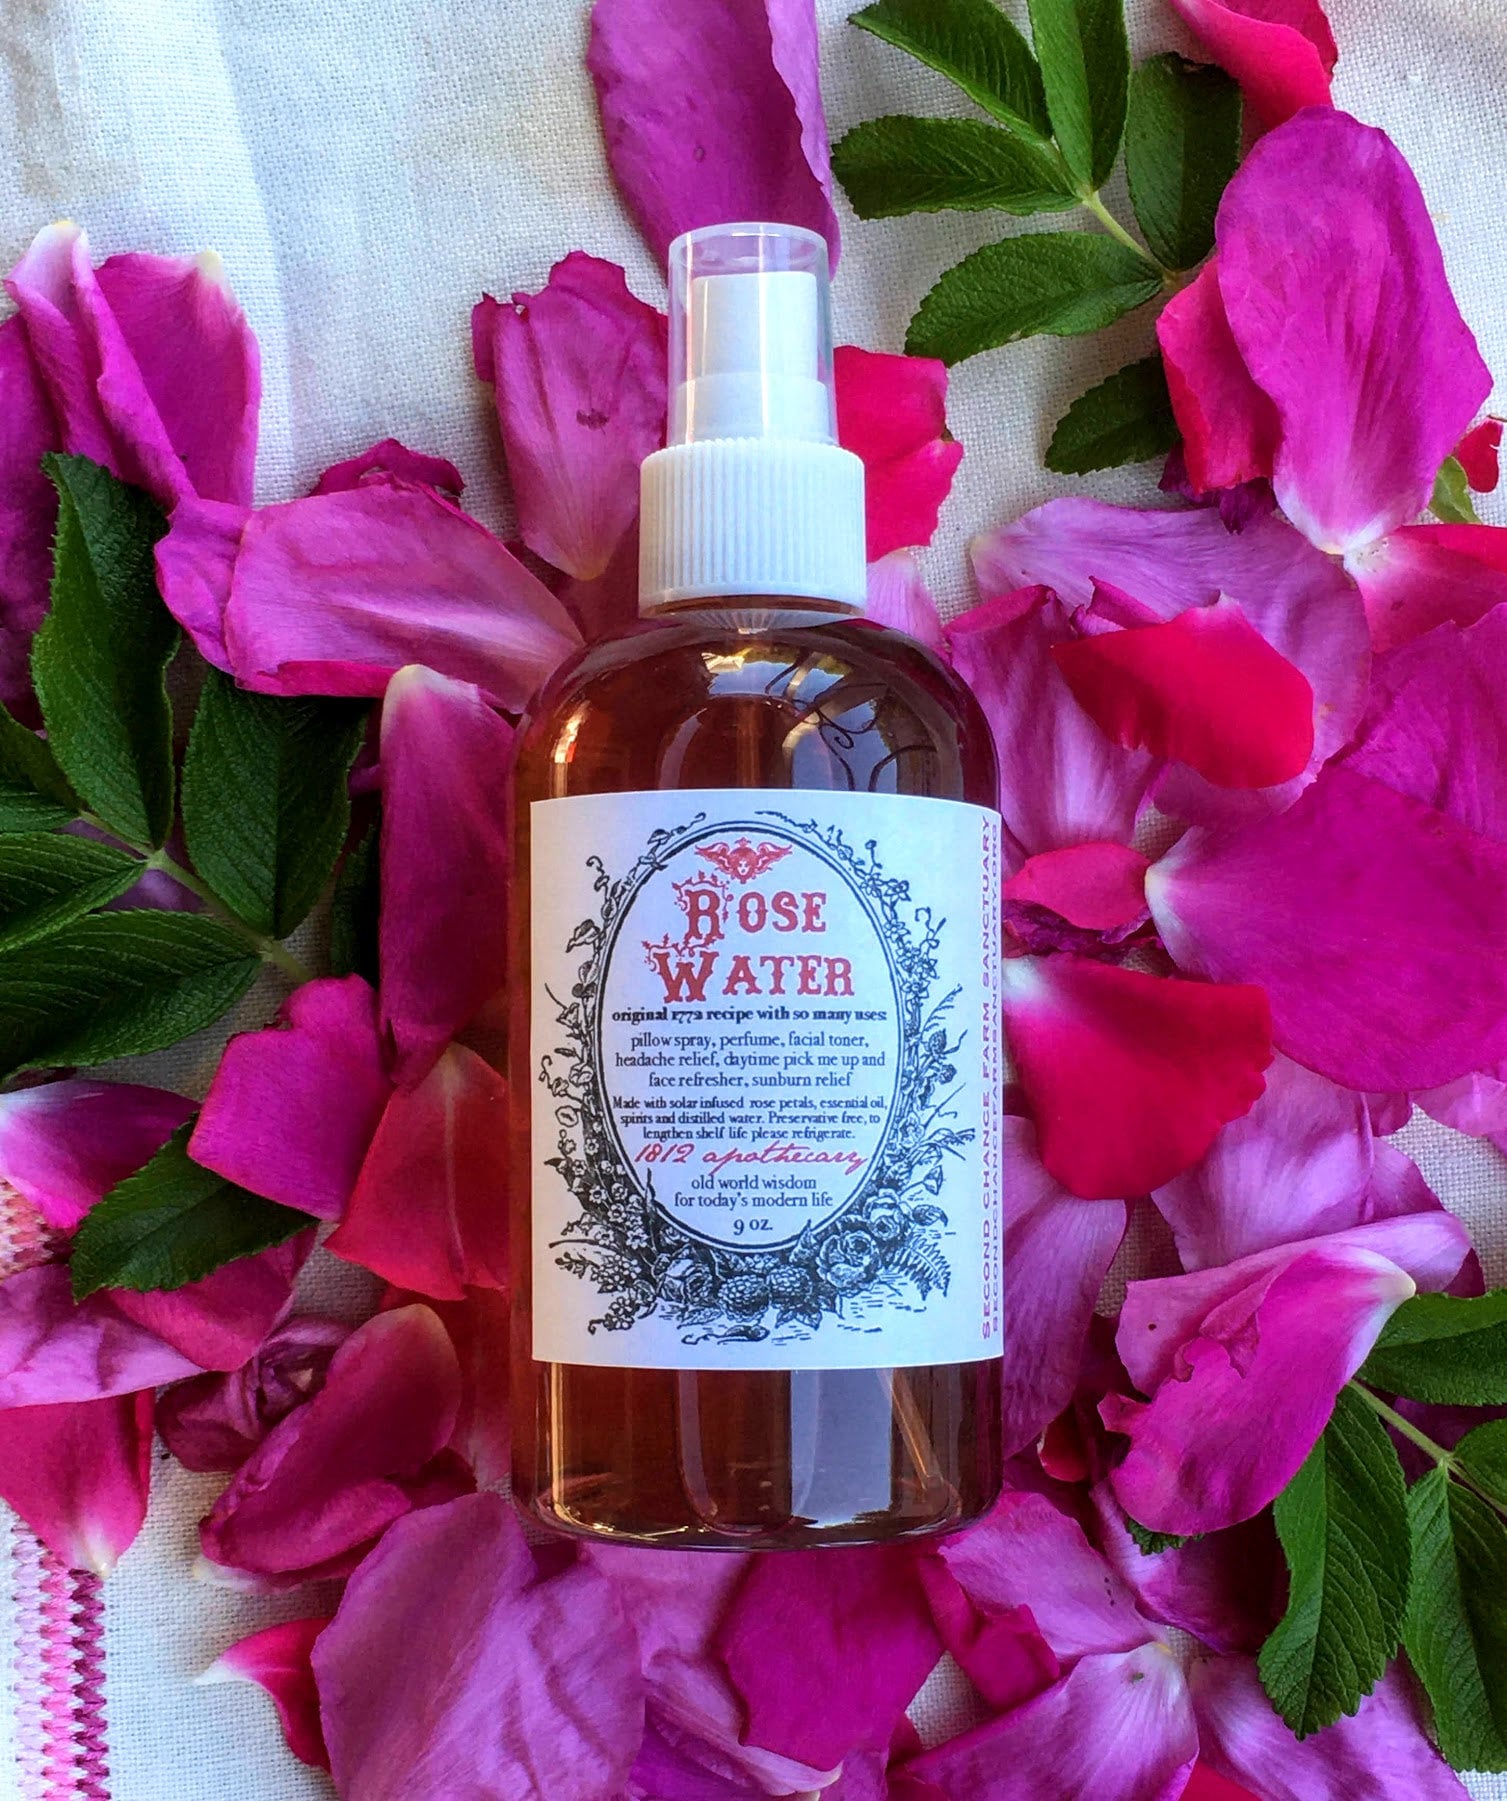 Pacifica Women's Beauty Spray Perfume, Persian Rose - 1 fl oz bottle